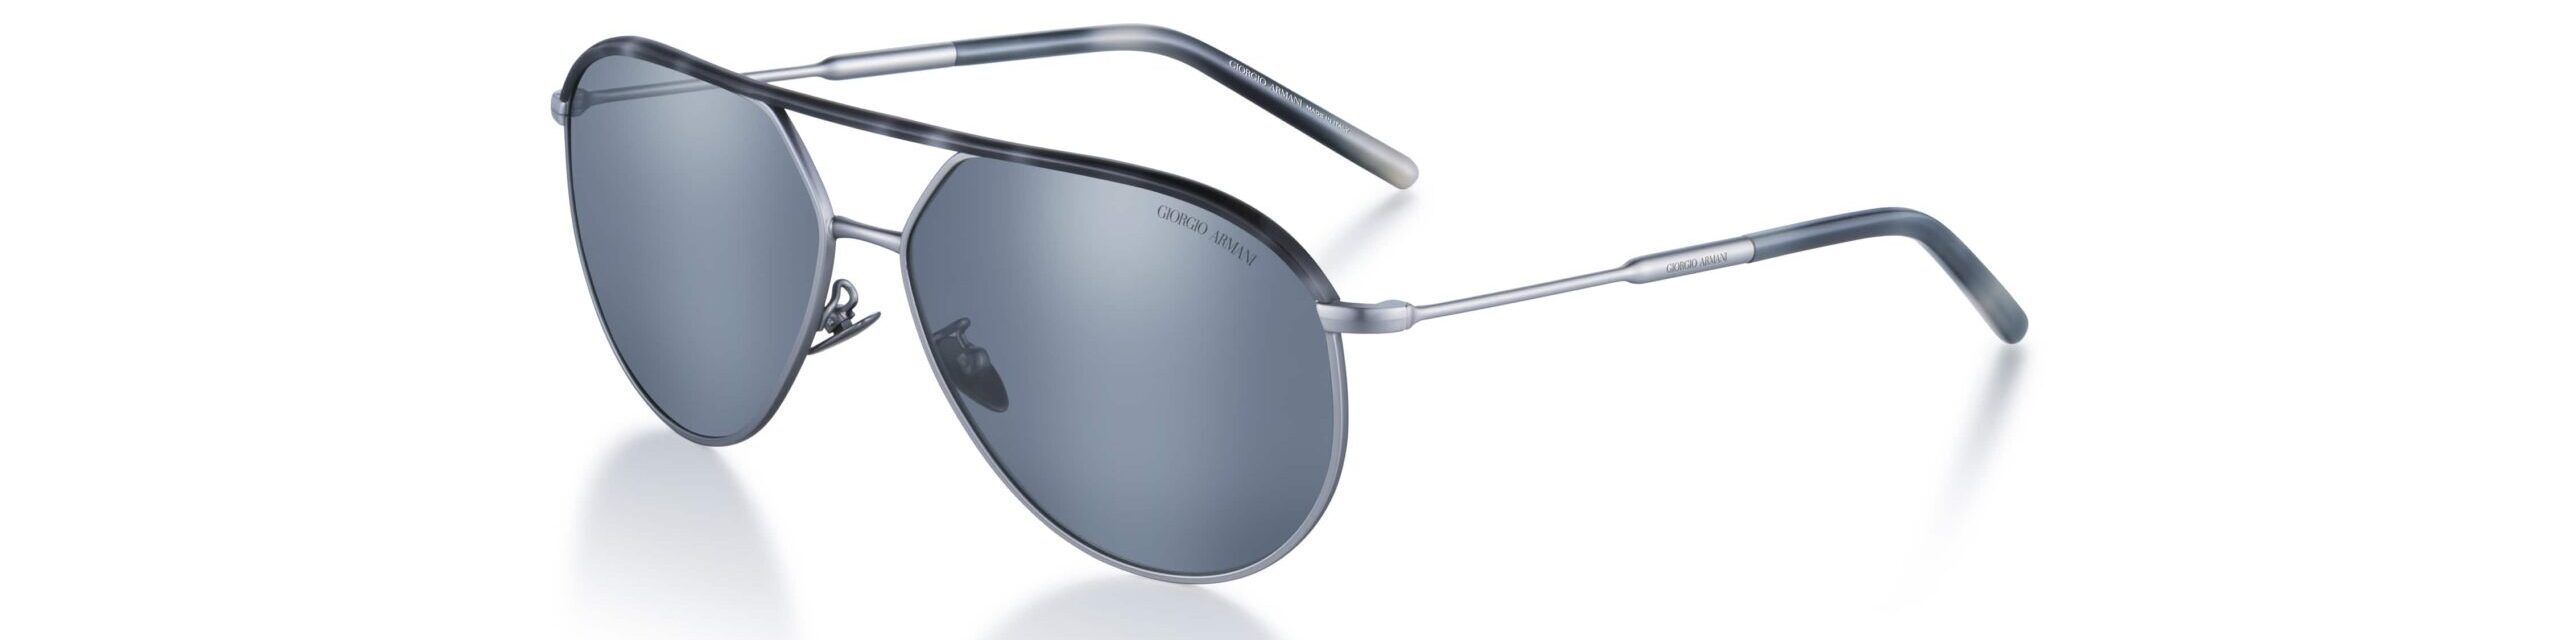 Nuovi occhiali Giorgio Armani Eyewear Primavera-Estate 2021